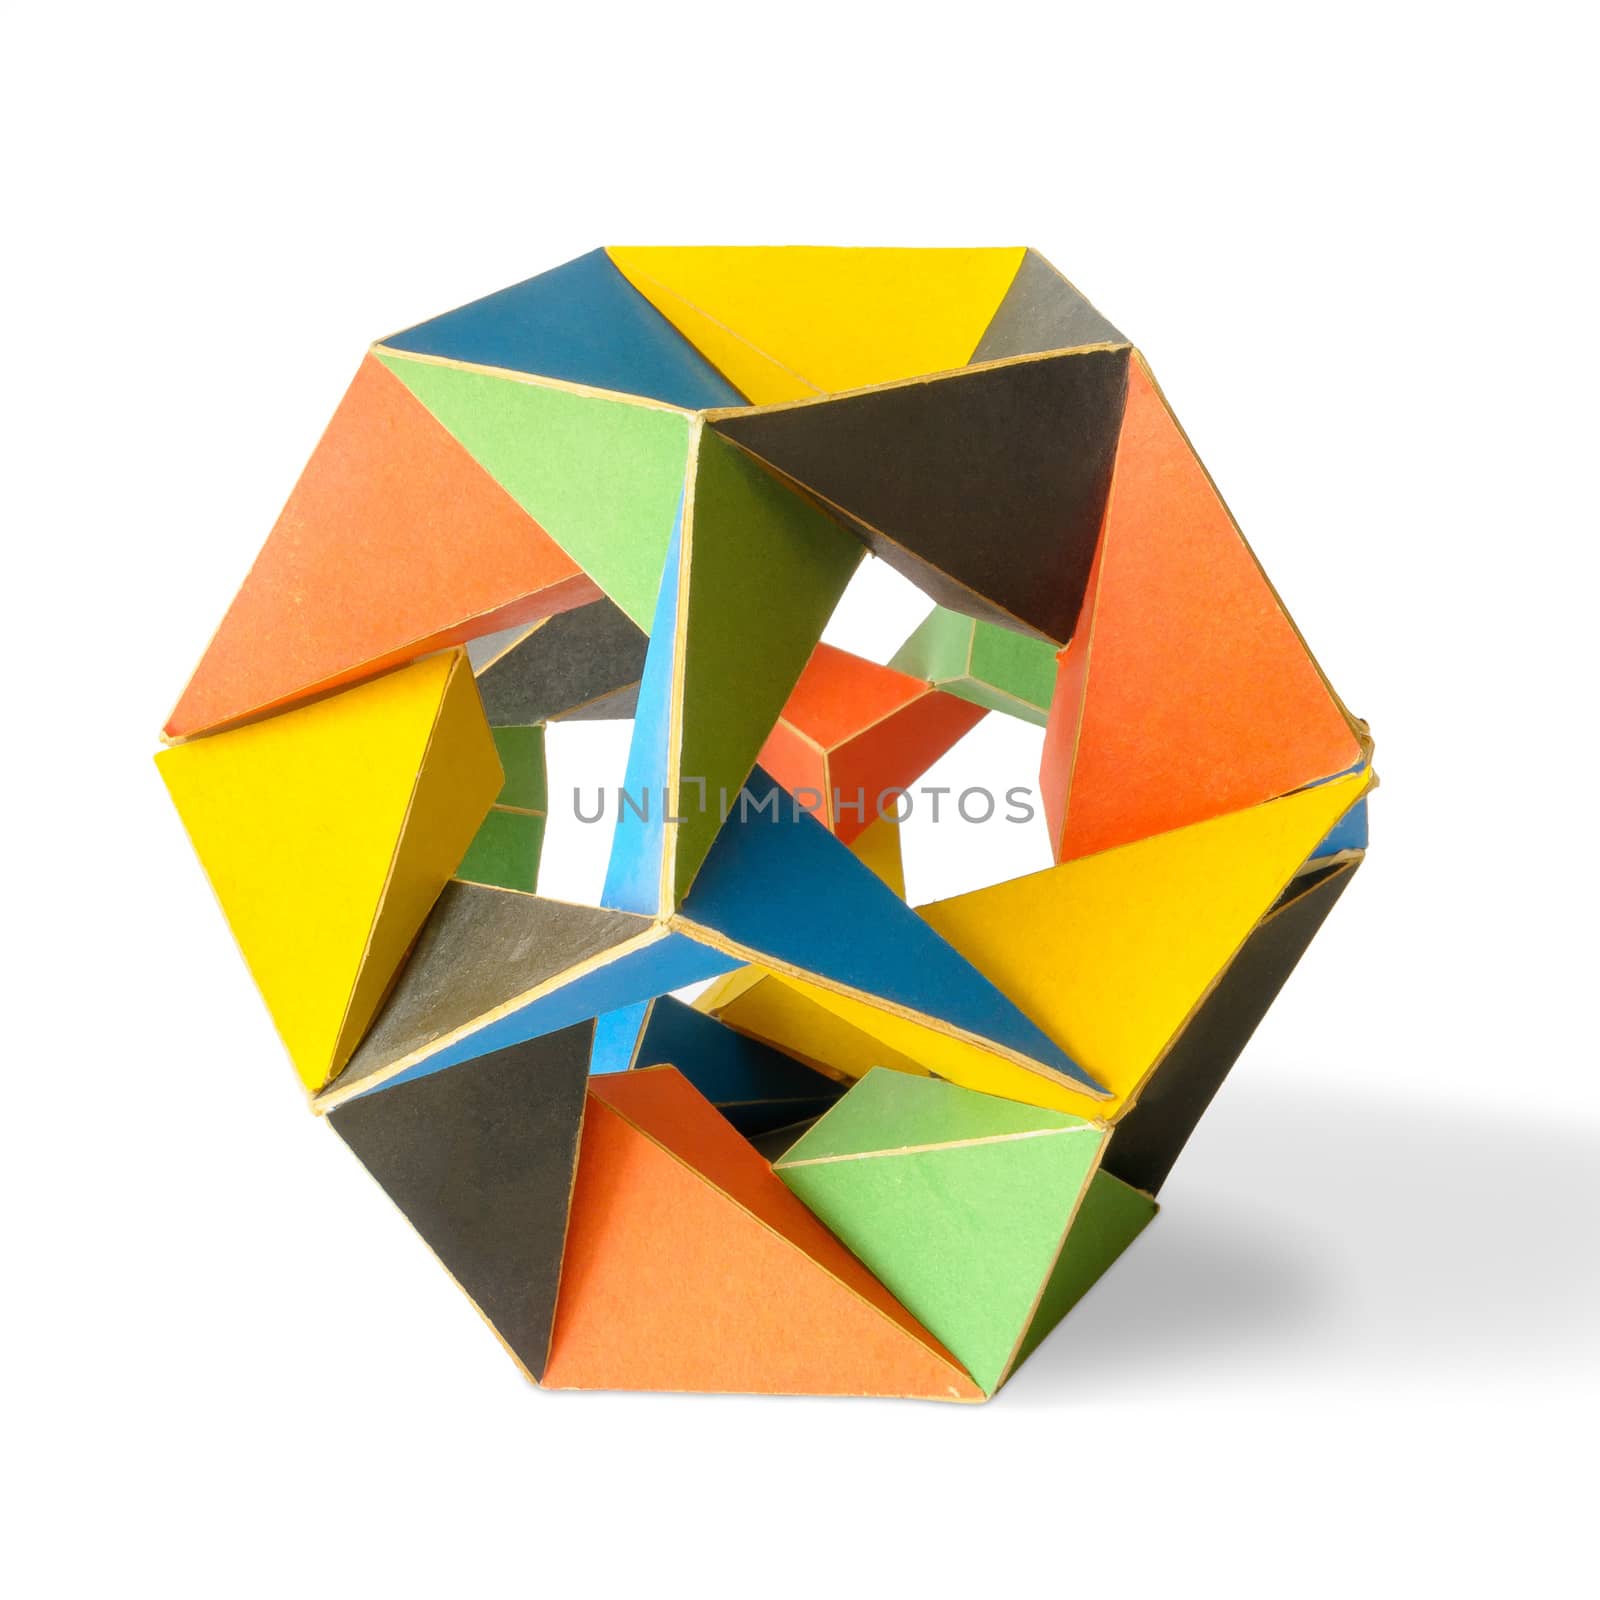 Colorful Icosahedron by MaxalTamor